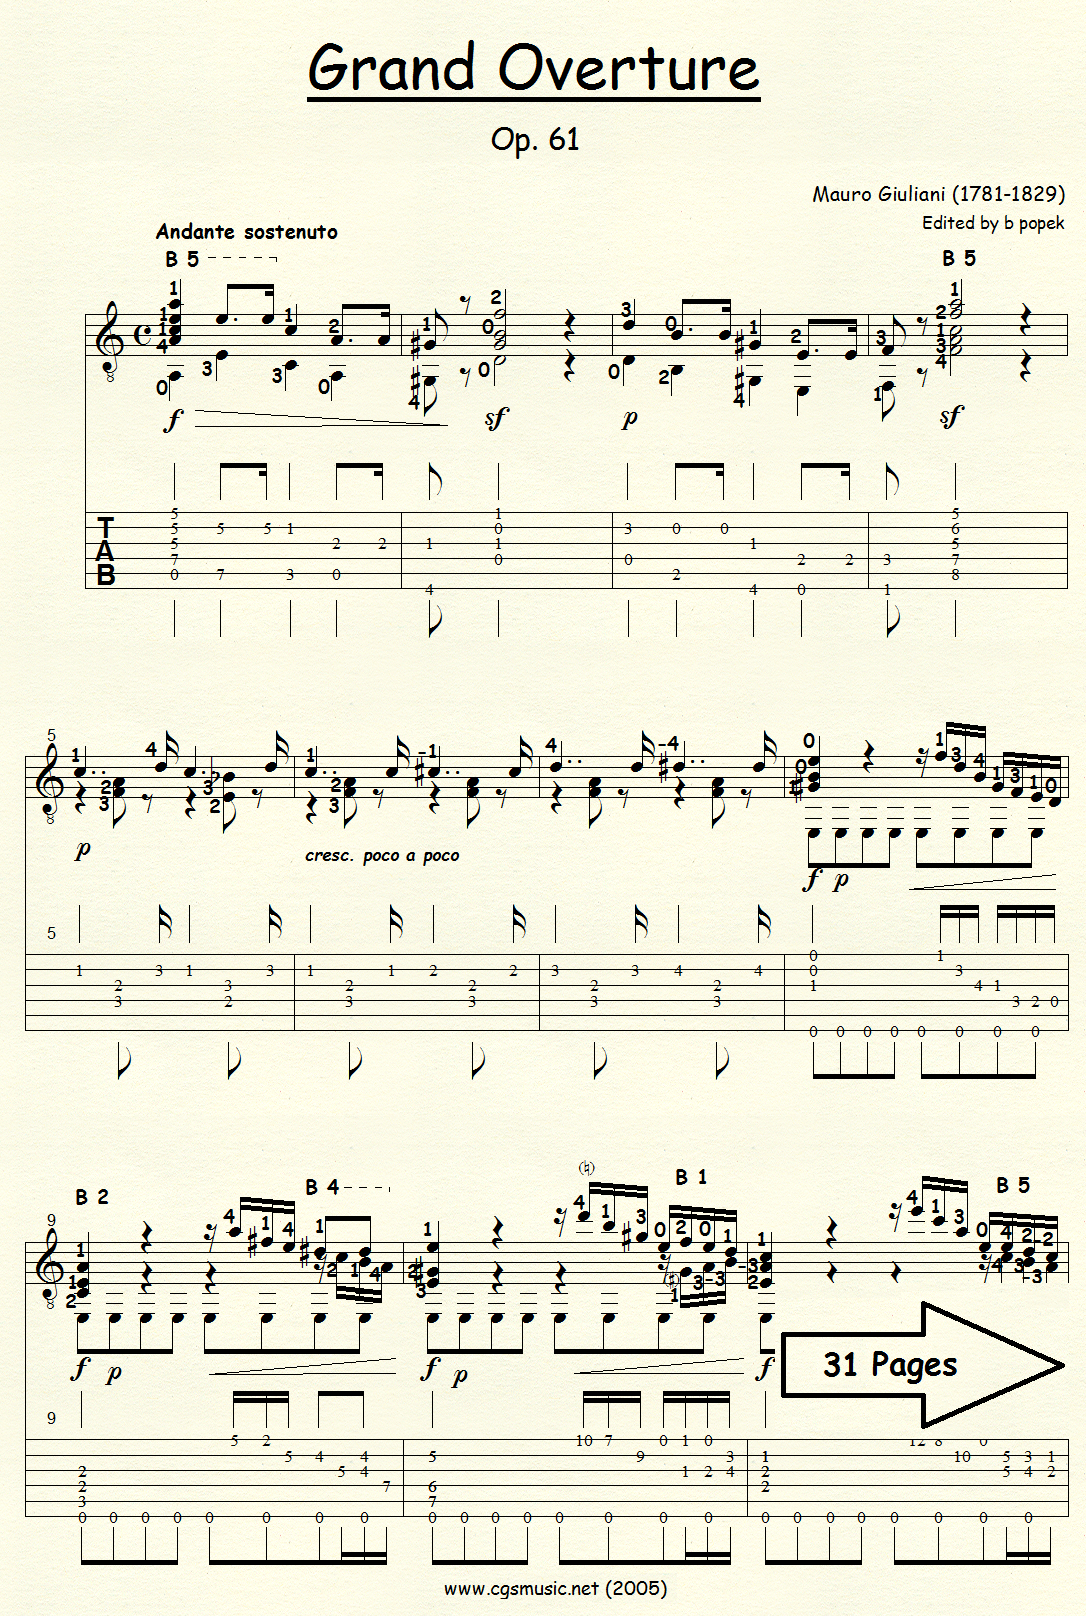 Grand Overture Op 61 (Giuliani) for Classical Guitar in Tablature